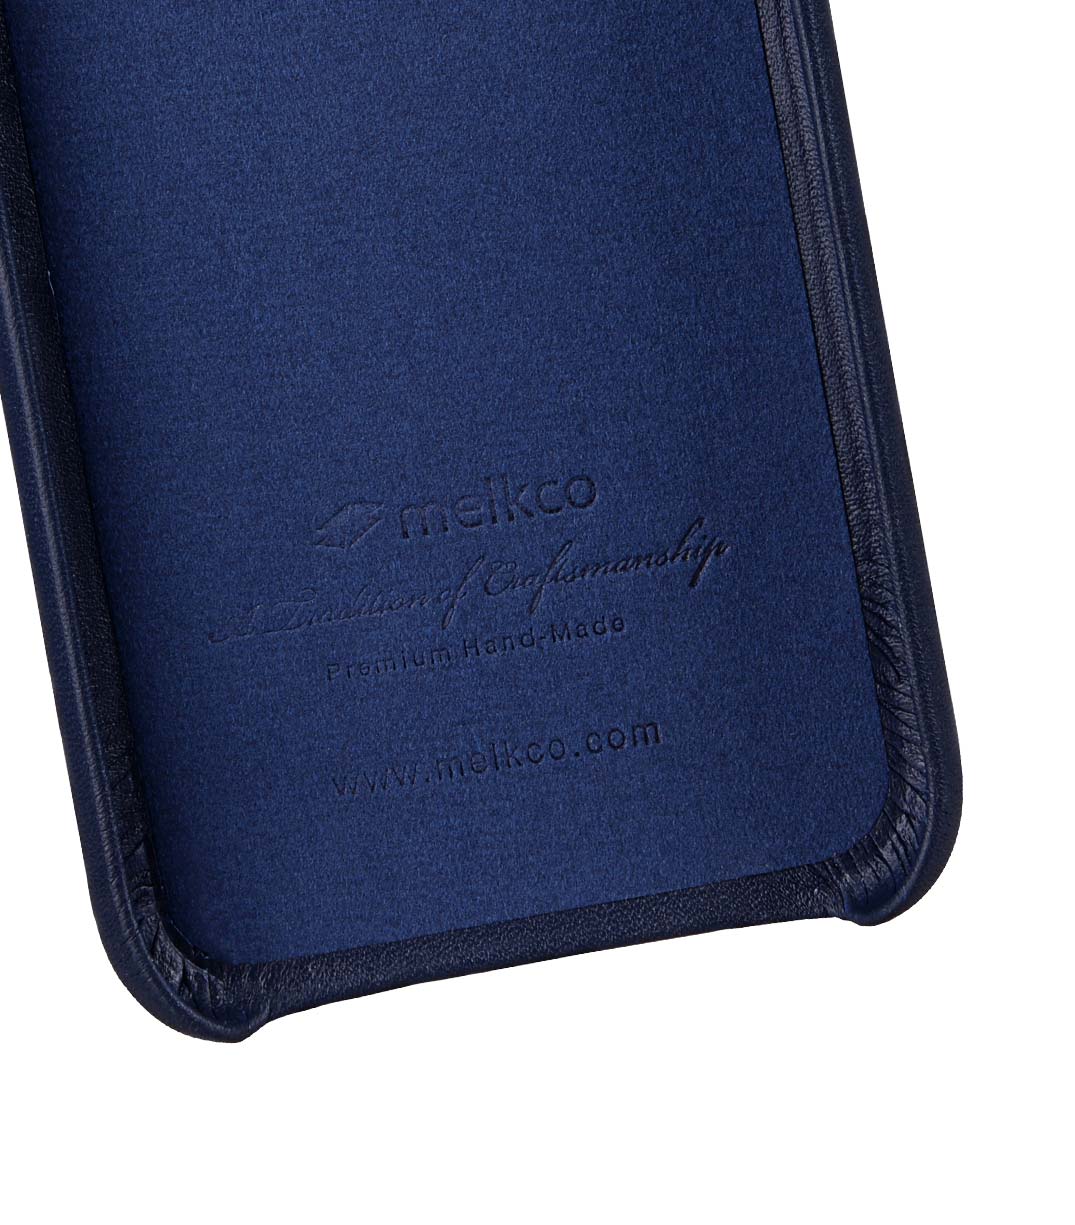 Melkco Origin Series Premium Sheep Leather Regal Snap Cover Case for Apple iPhone X / XS - ( Dark Blue )